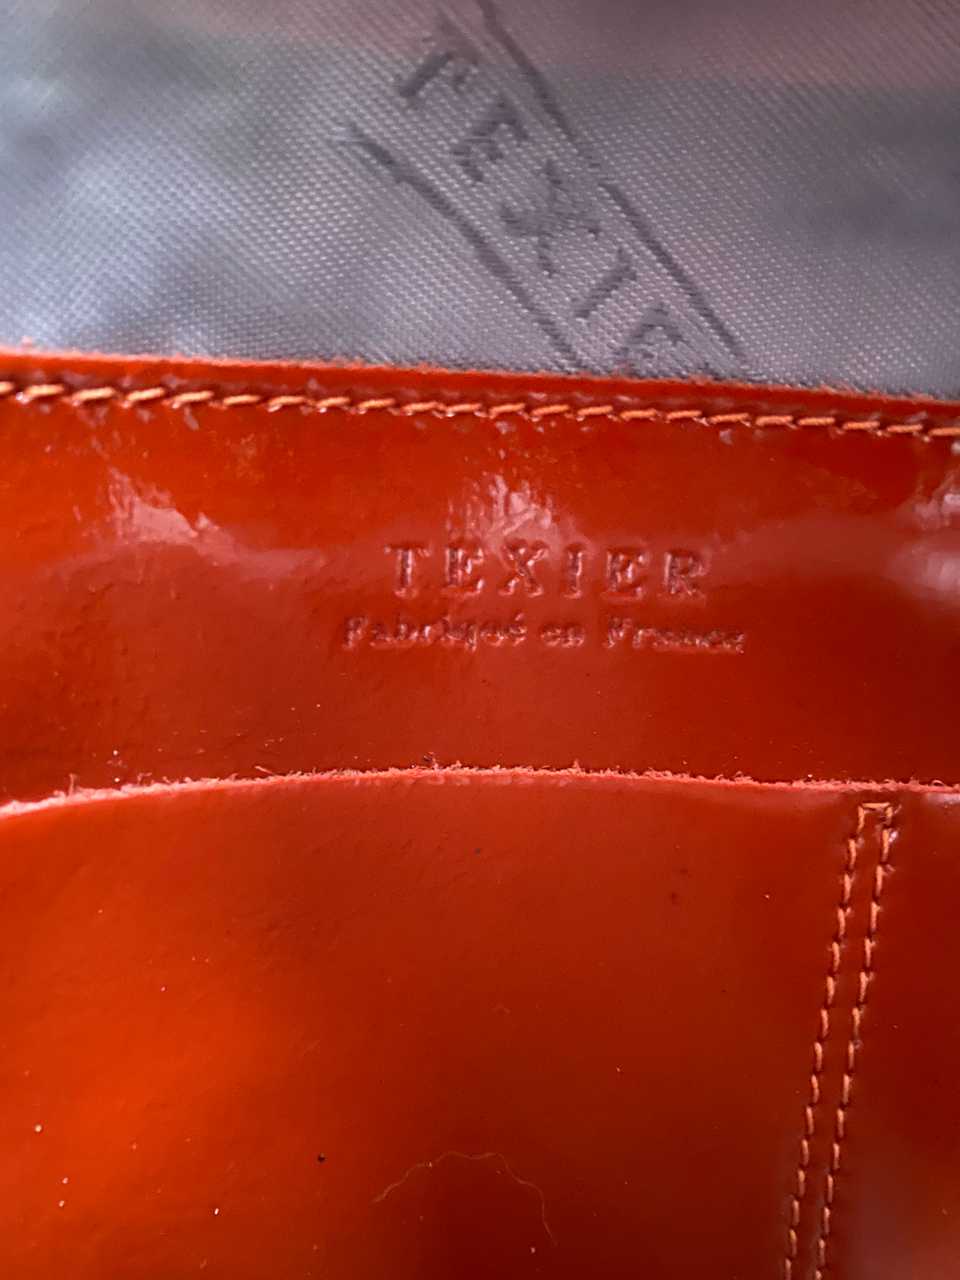 Texier Orange Crossbody bag Cherchez La Femme brand